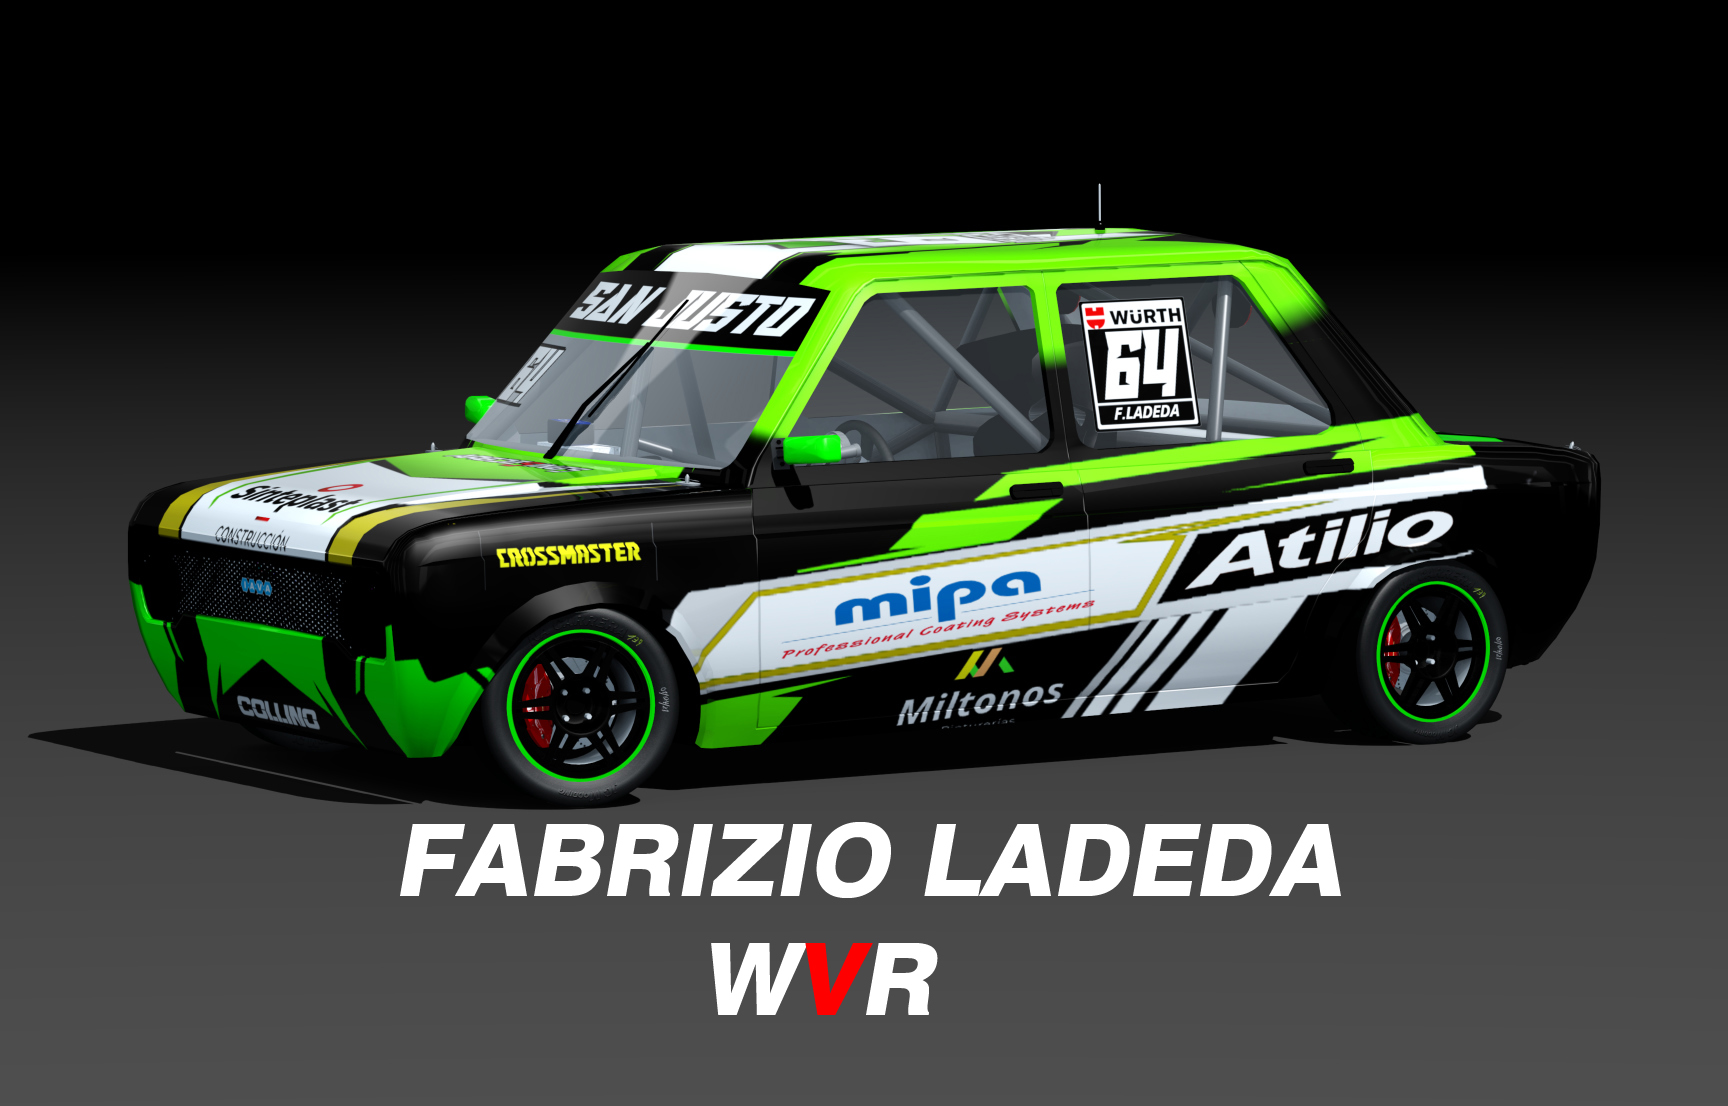 WVR Turismo 1.4 FIAT 128, skin fabrizio ladeda